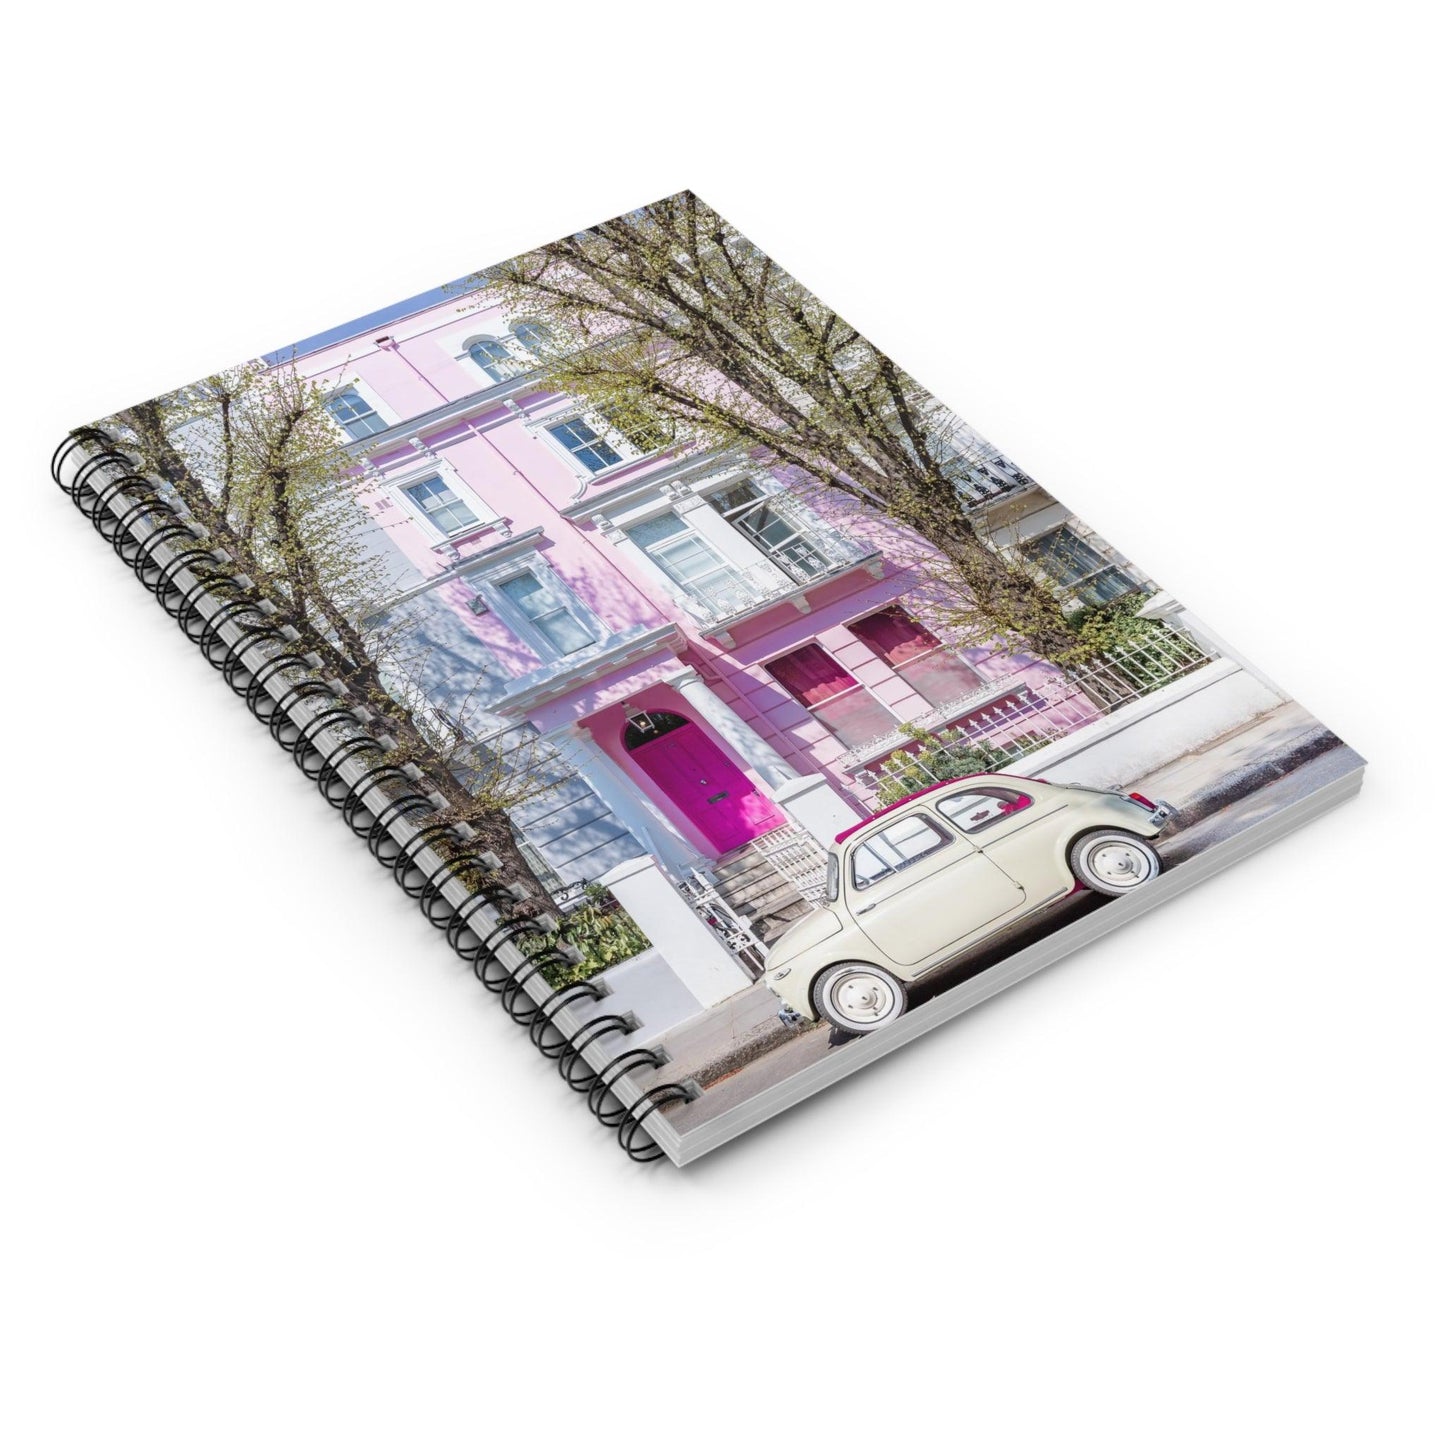 Notting Hill London Spiral Notebook - Departures Print Shop